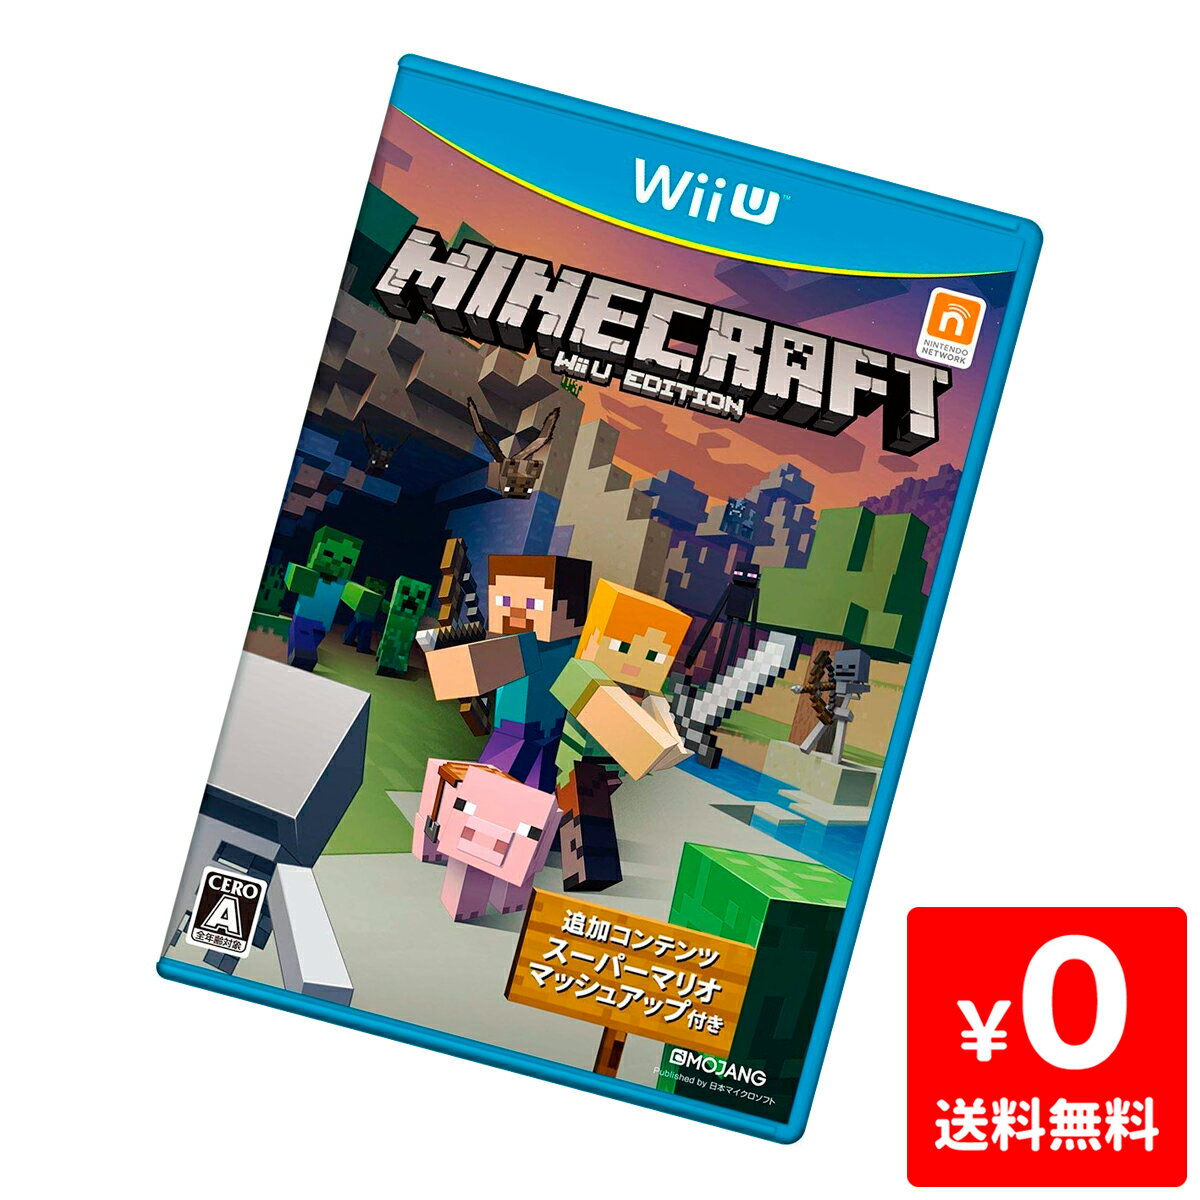 WiiU マインクラフト MINECRAFT ソフト ケースあり Nintendo 任天堂 ニンテンドー 中古 4549576053509 送料無料 【中古】